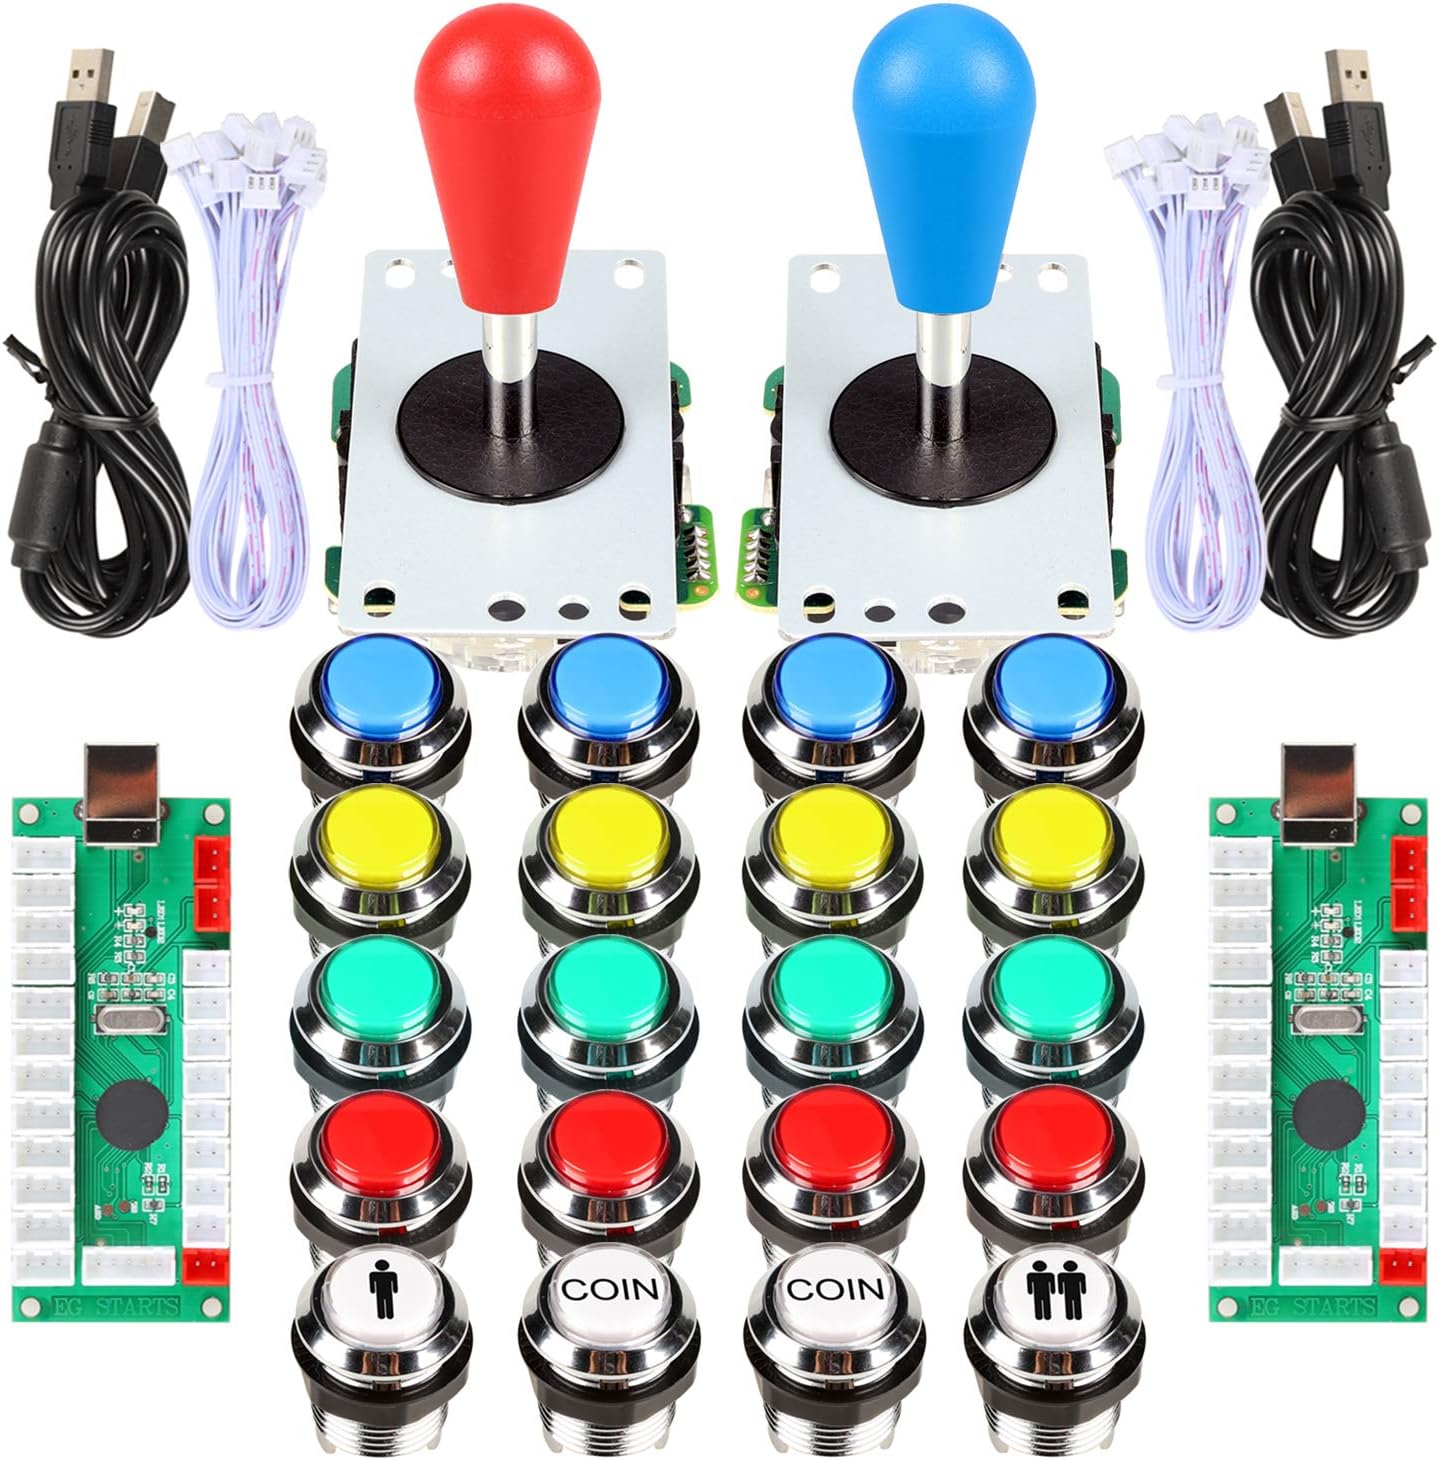 20 Buttons USB MAME Arcade Sanwa Control Panel LED Illuminated Kit 2 Joysticks 